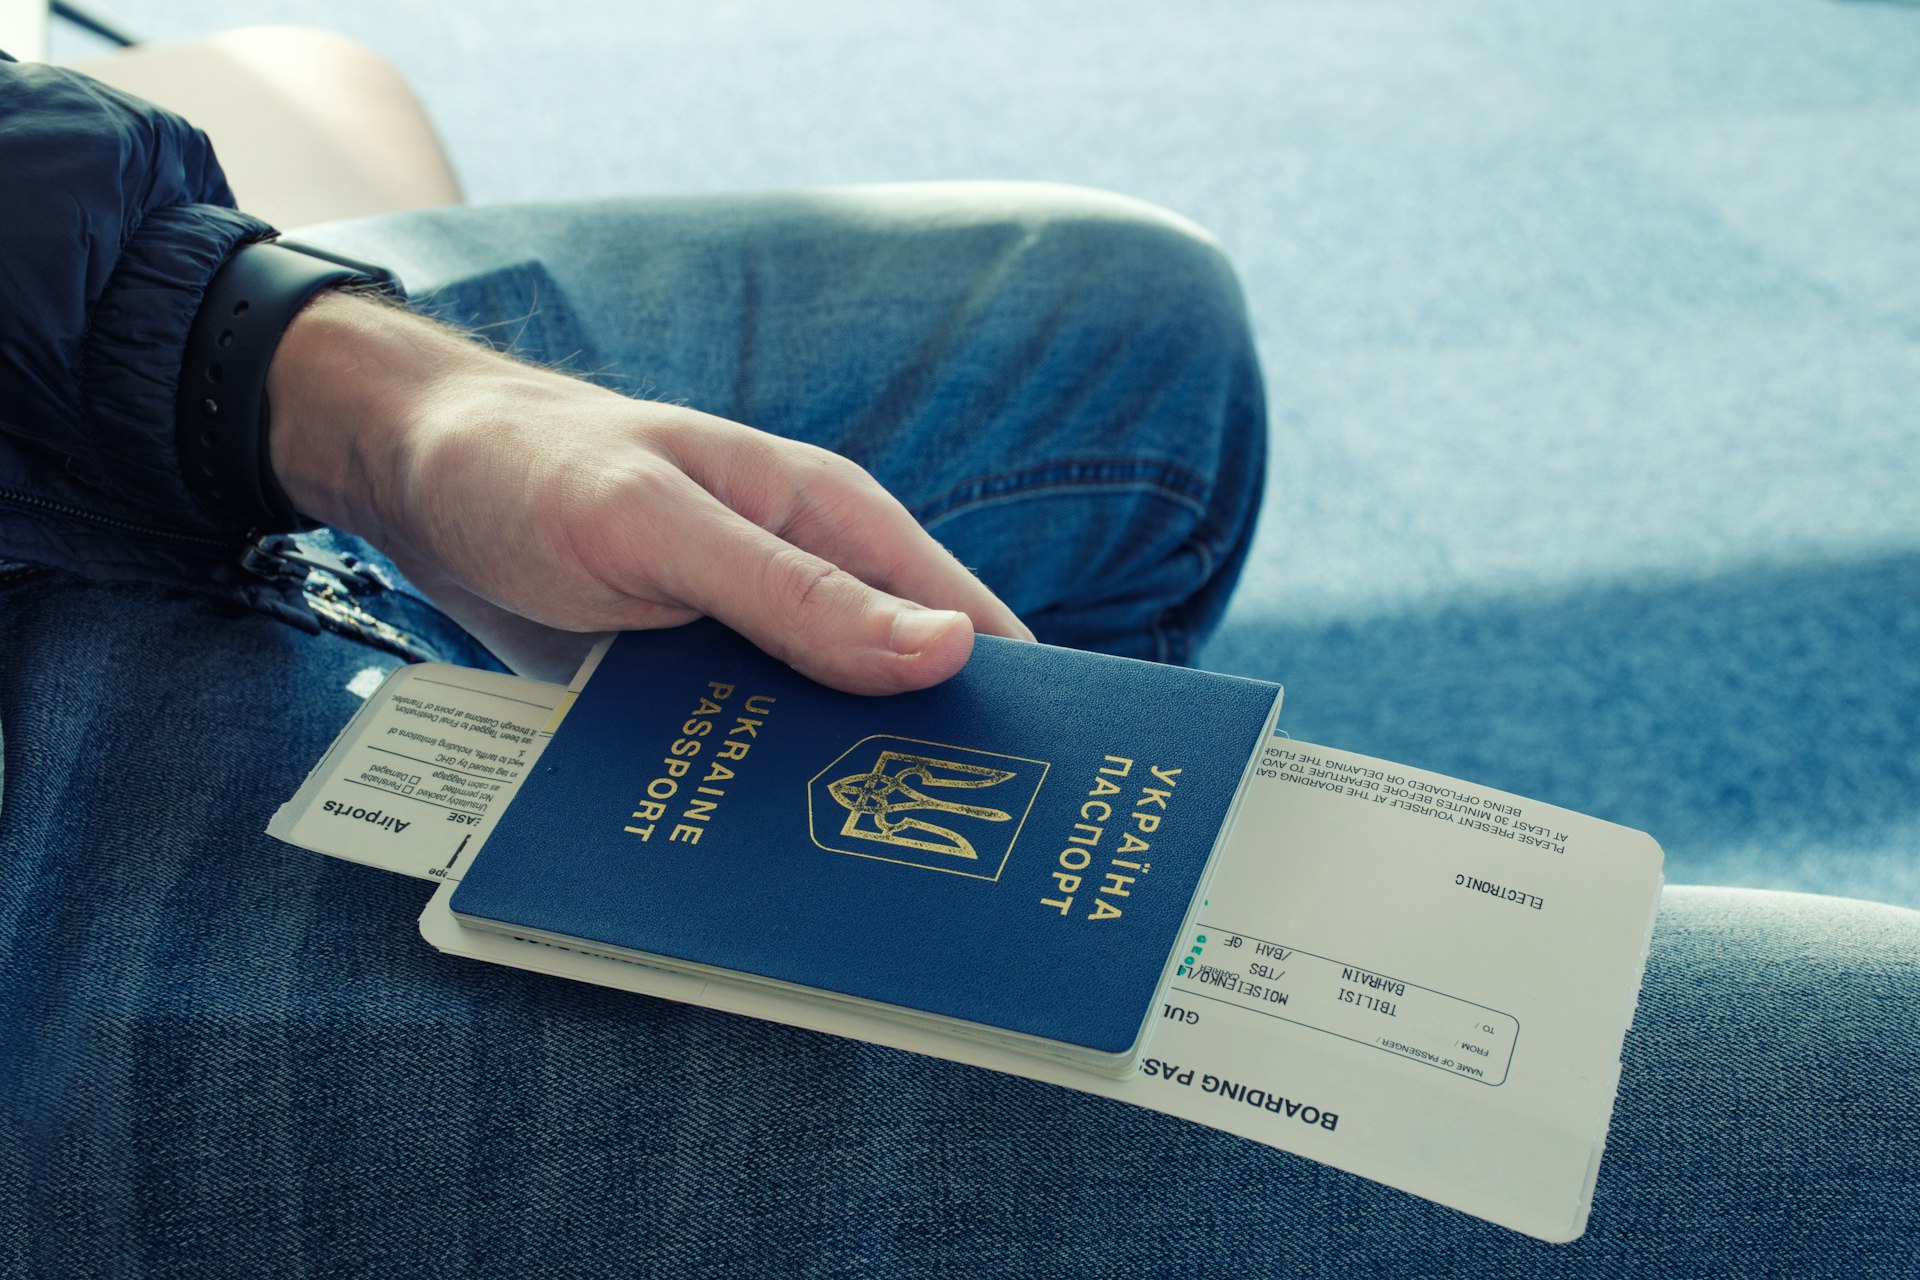 A passenger's hand holding passport and ticket